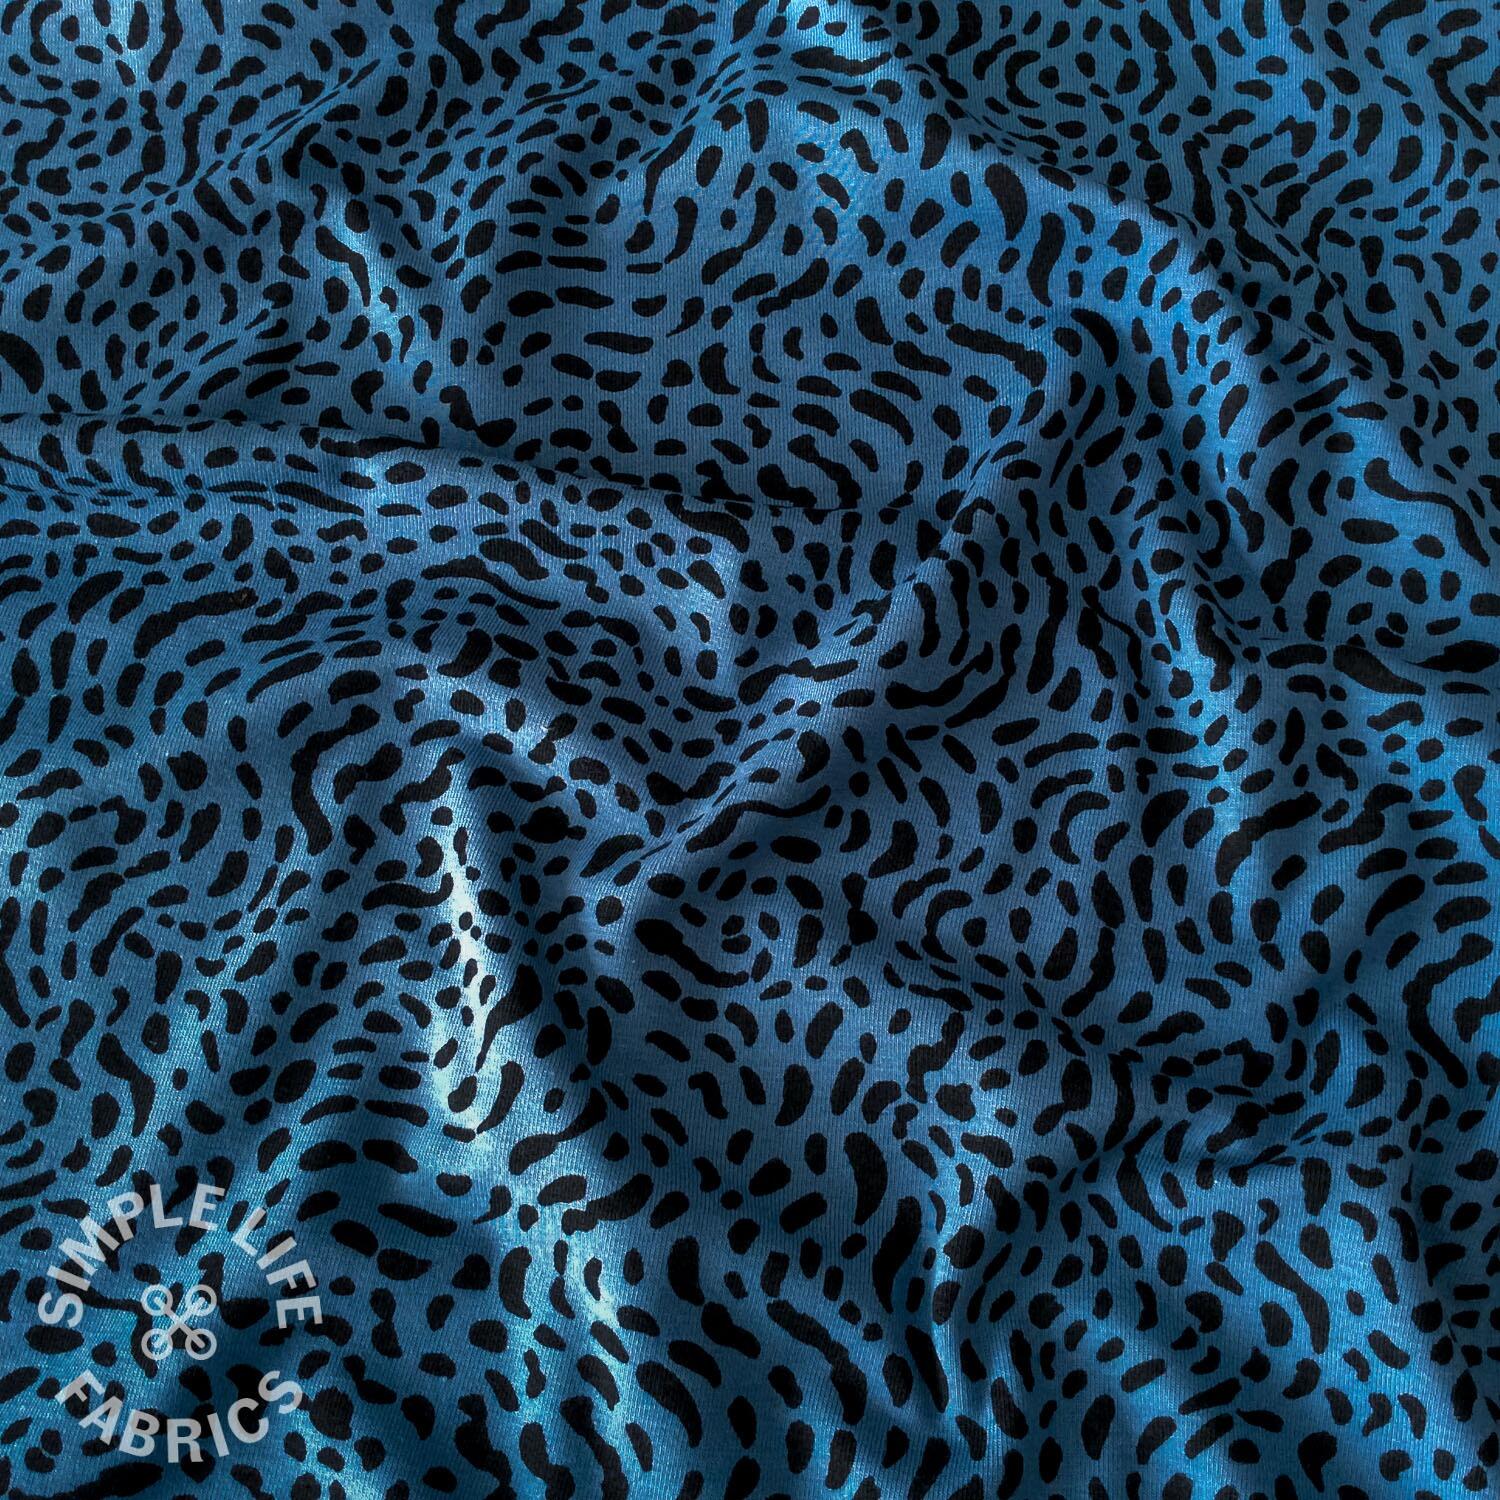 Animal print jersey fabric blue